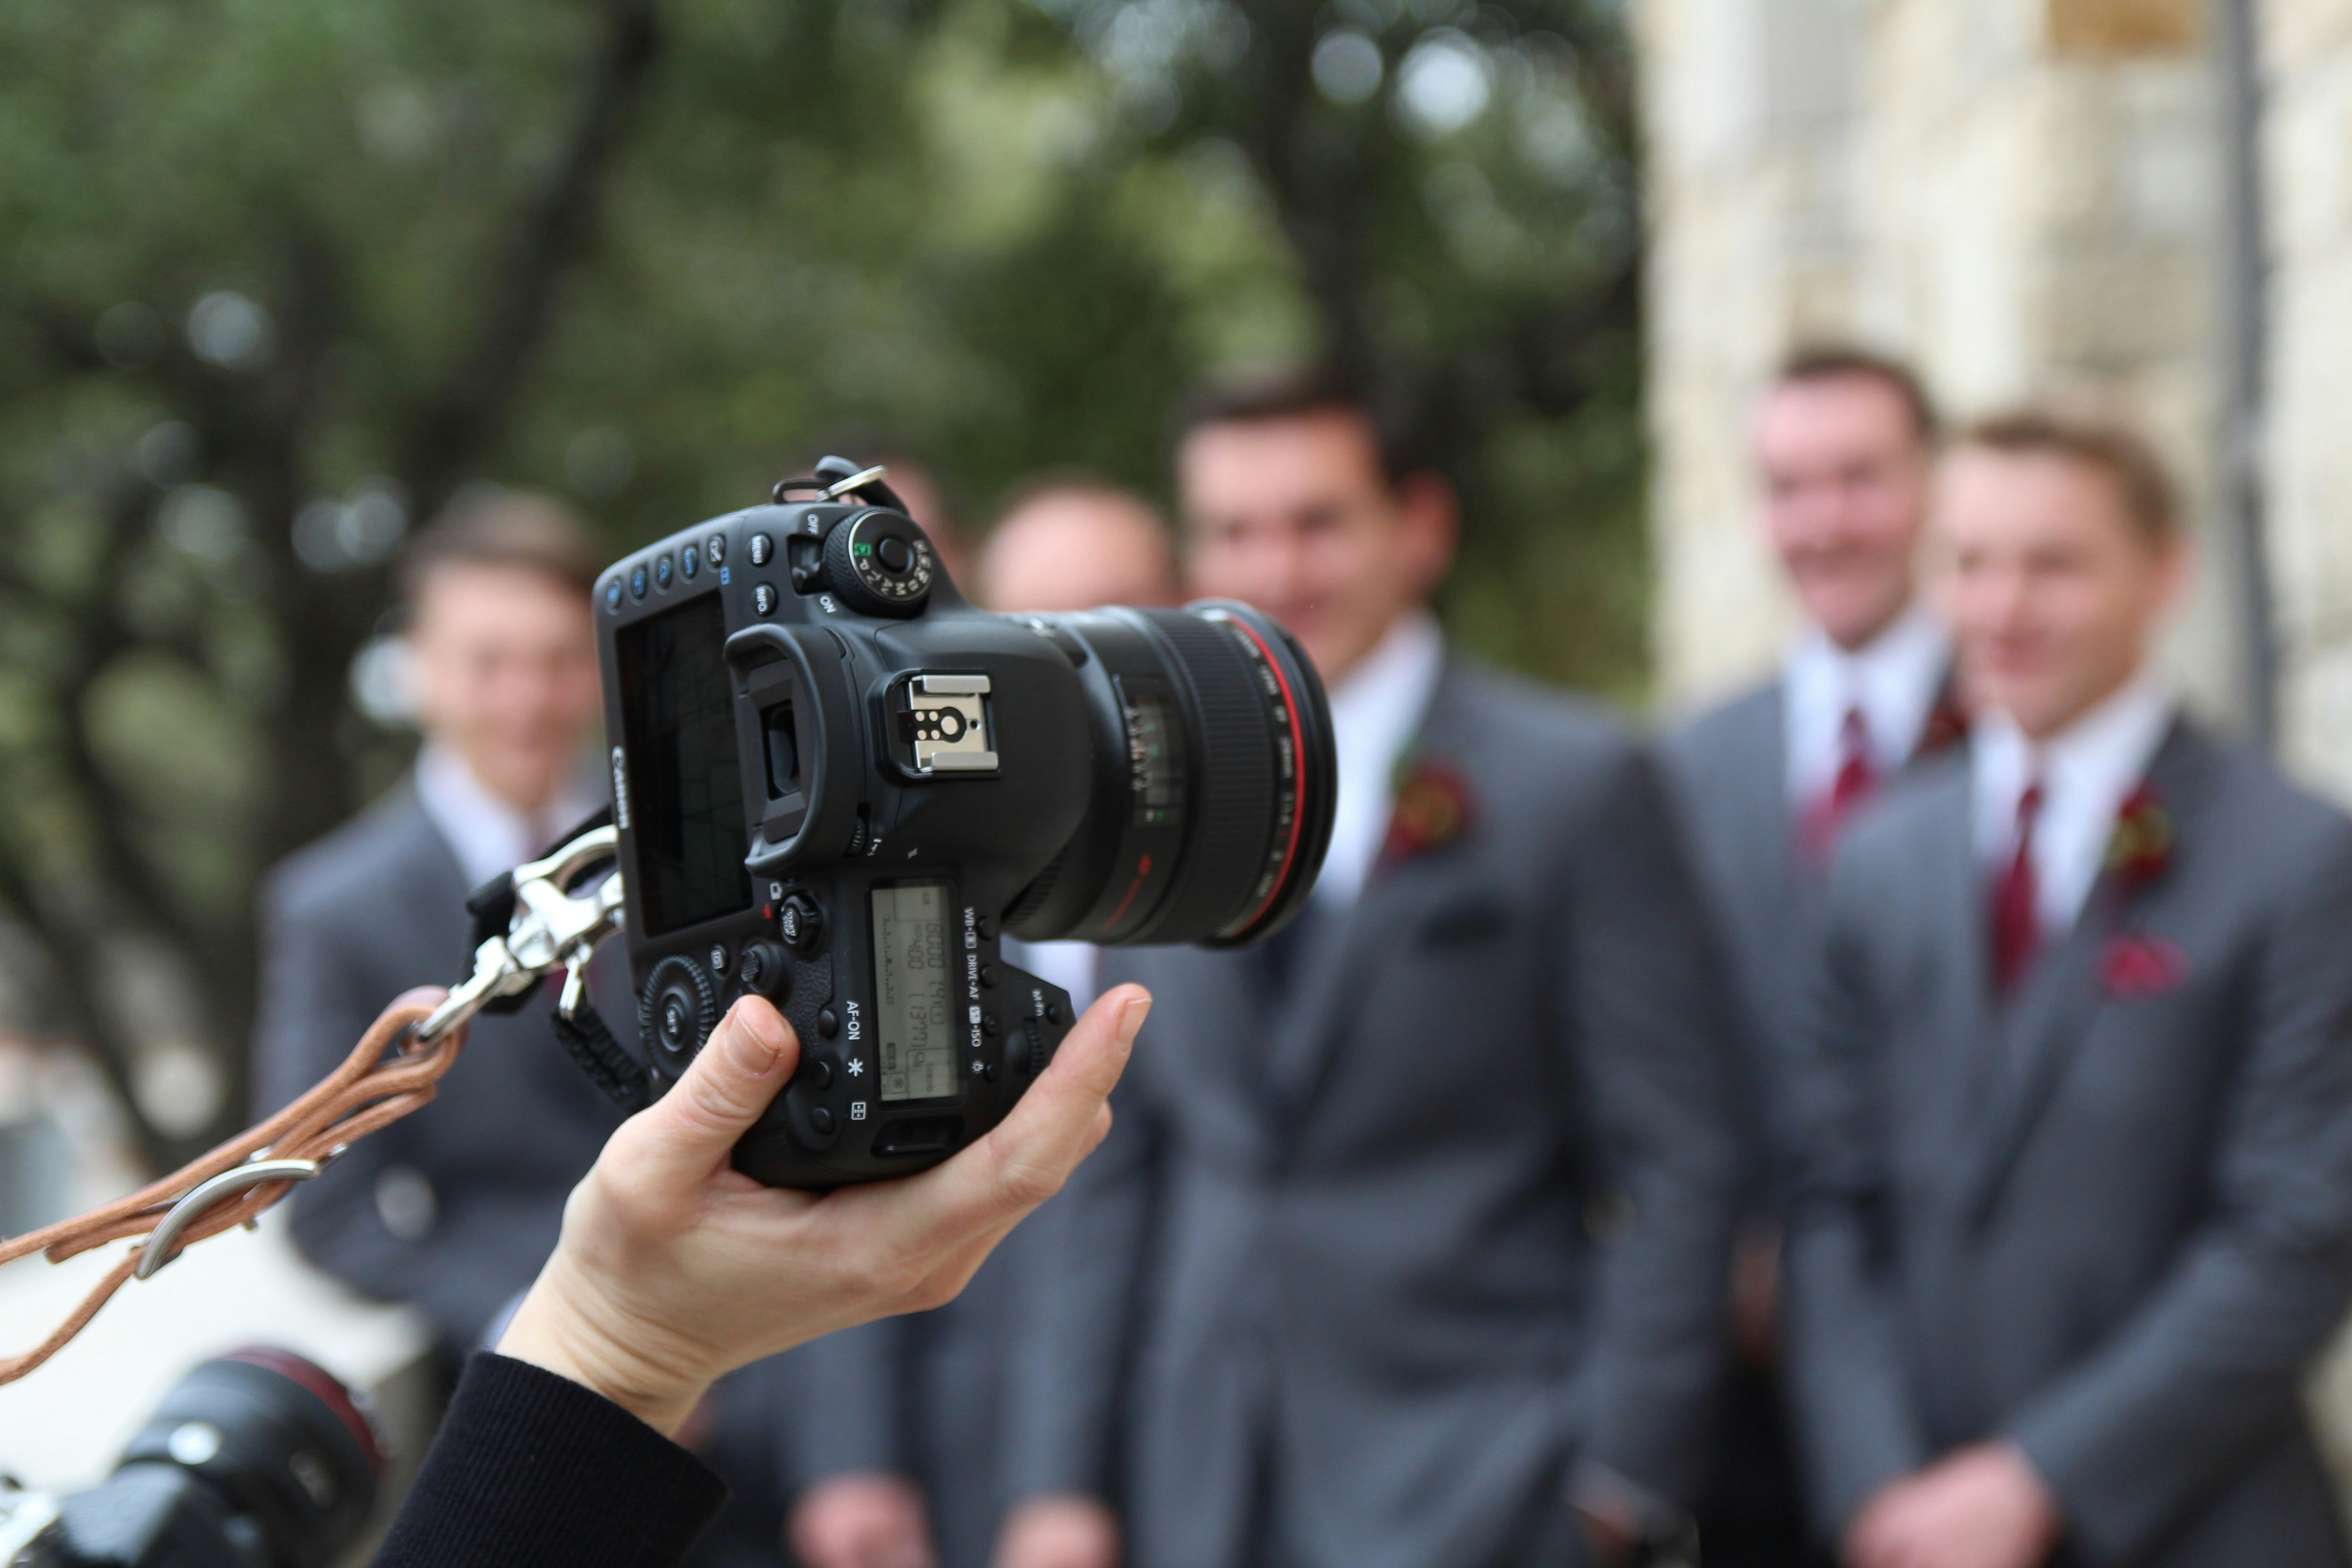 shooting photo mariage, tarif photographe mariage, photographe mariage prix 